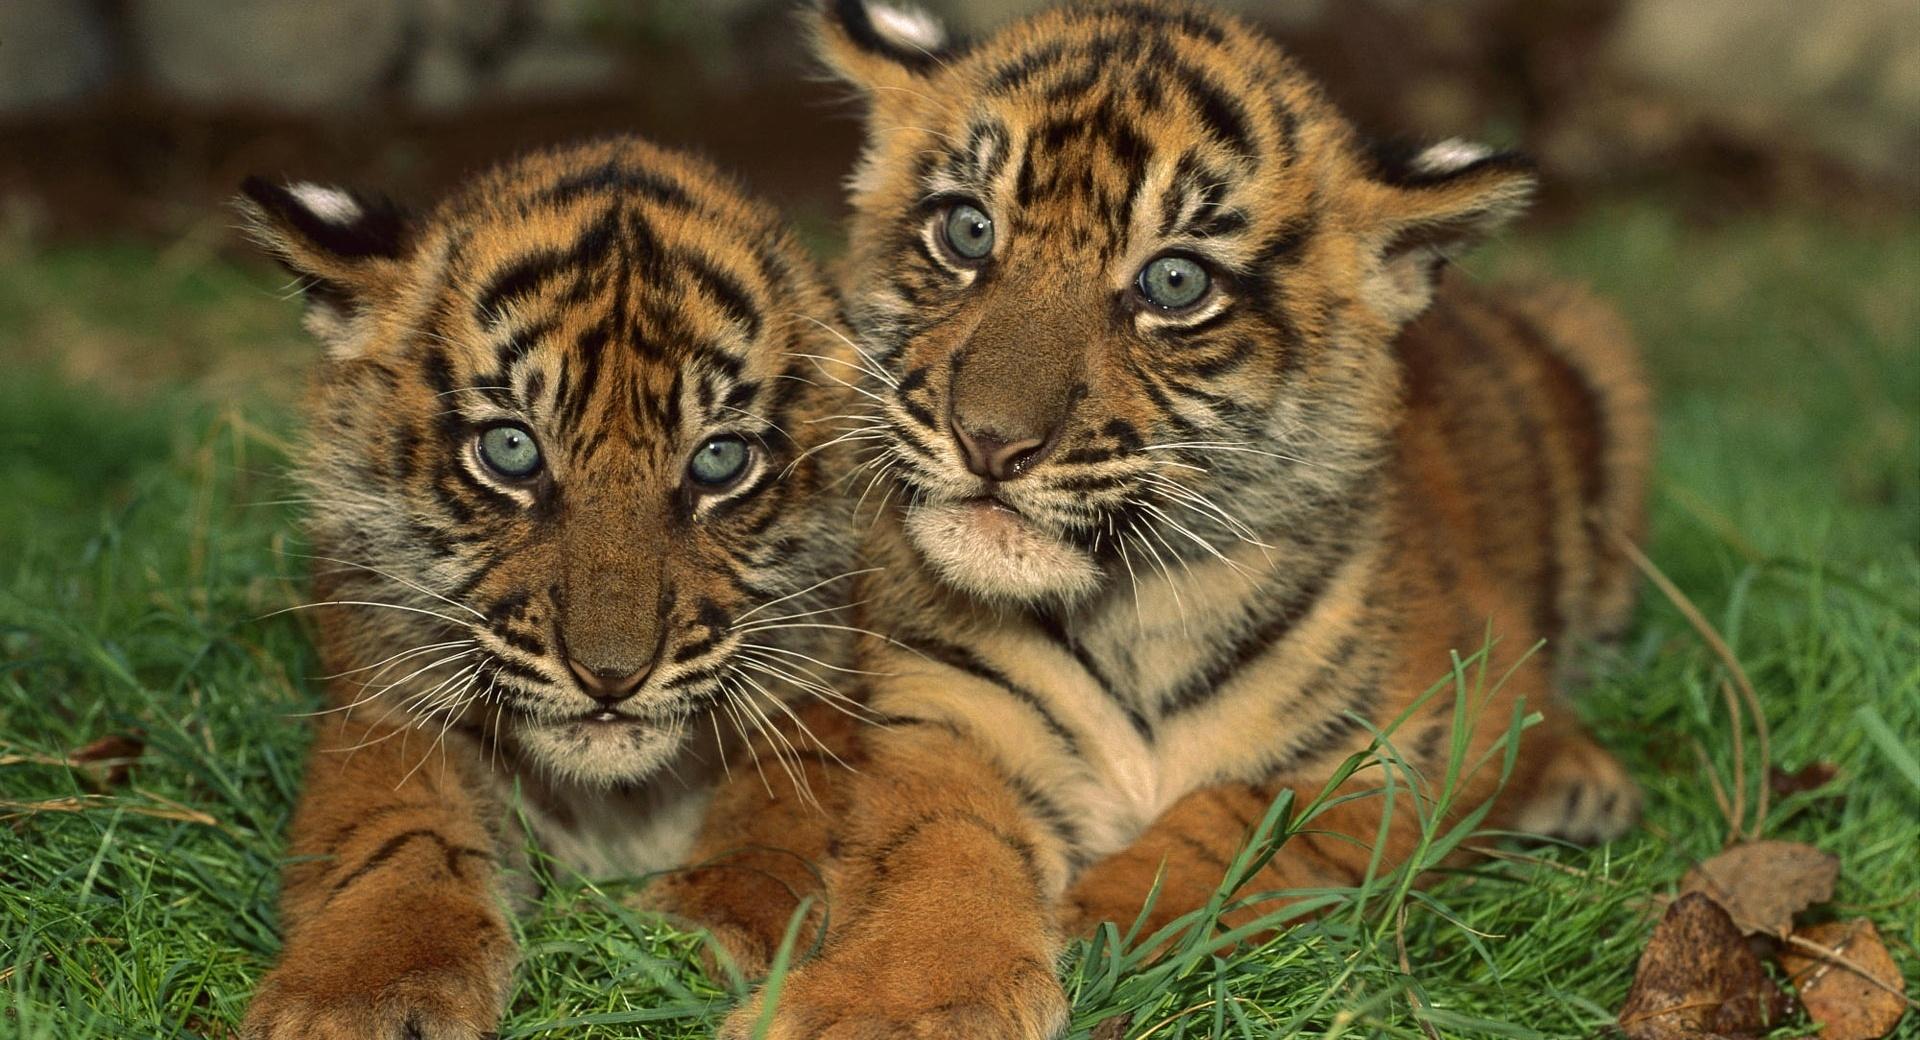 Sumatran Tiger Cubs at 1024 x 1024 iPad size wallpapers HD quality